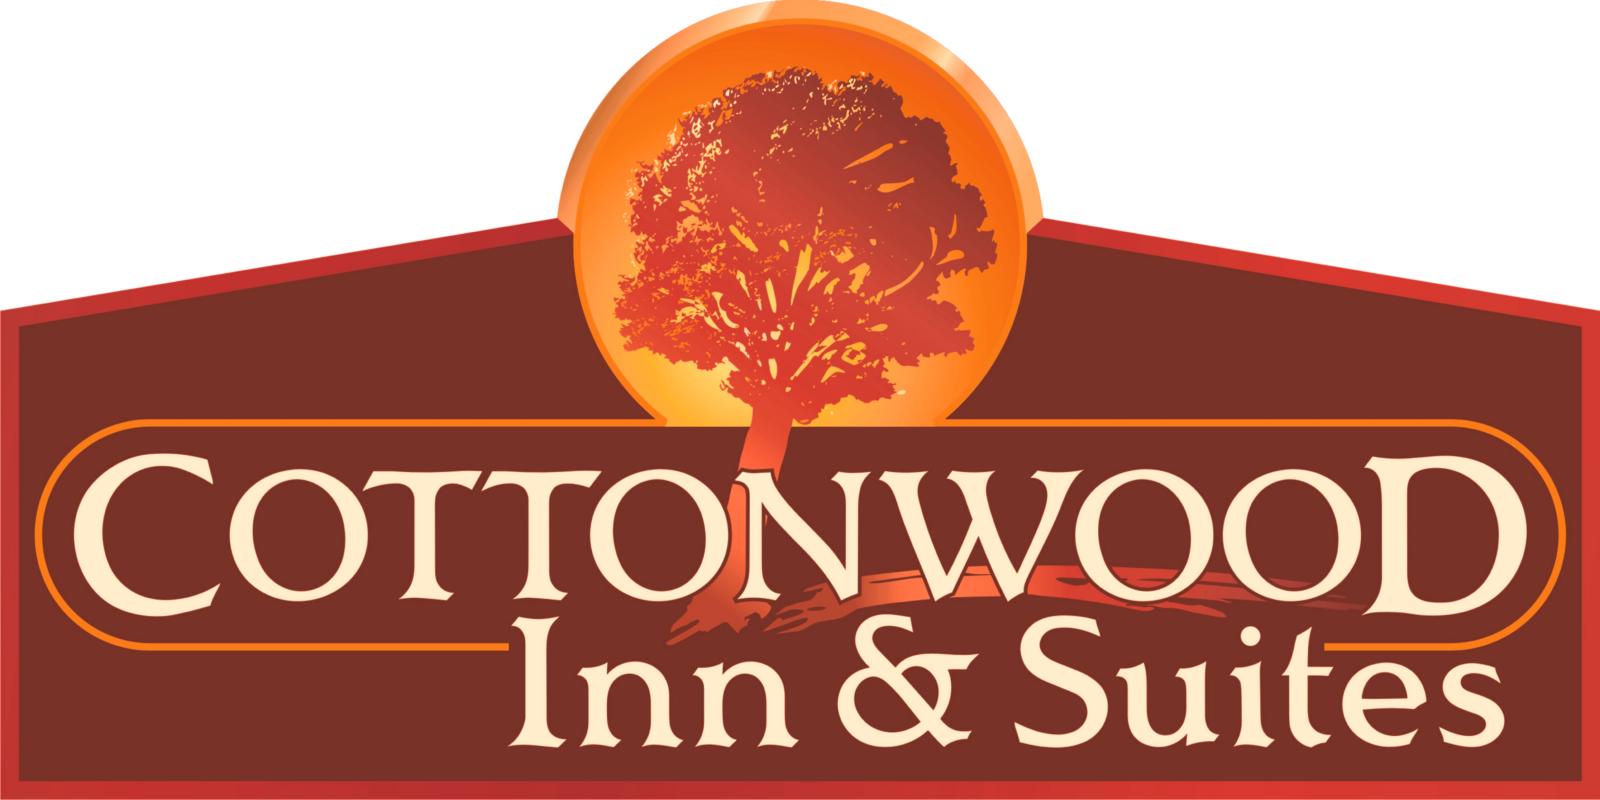 Cottonwood Inn & Suites (Silver)